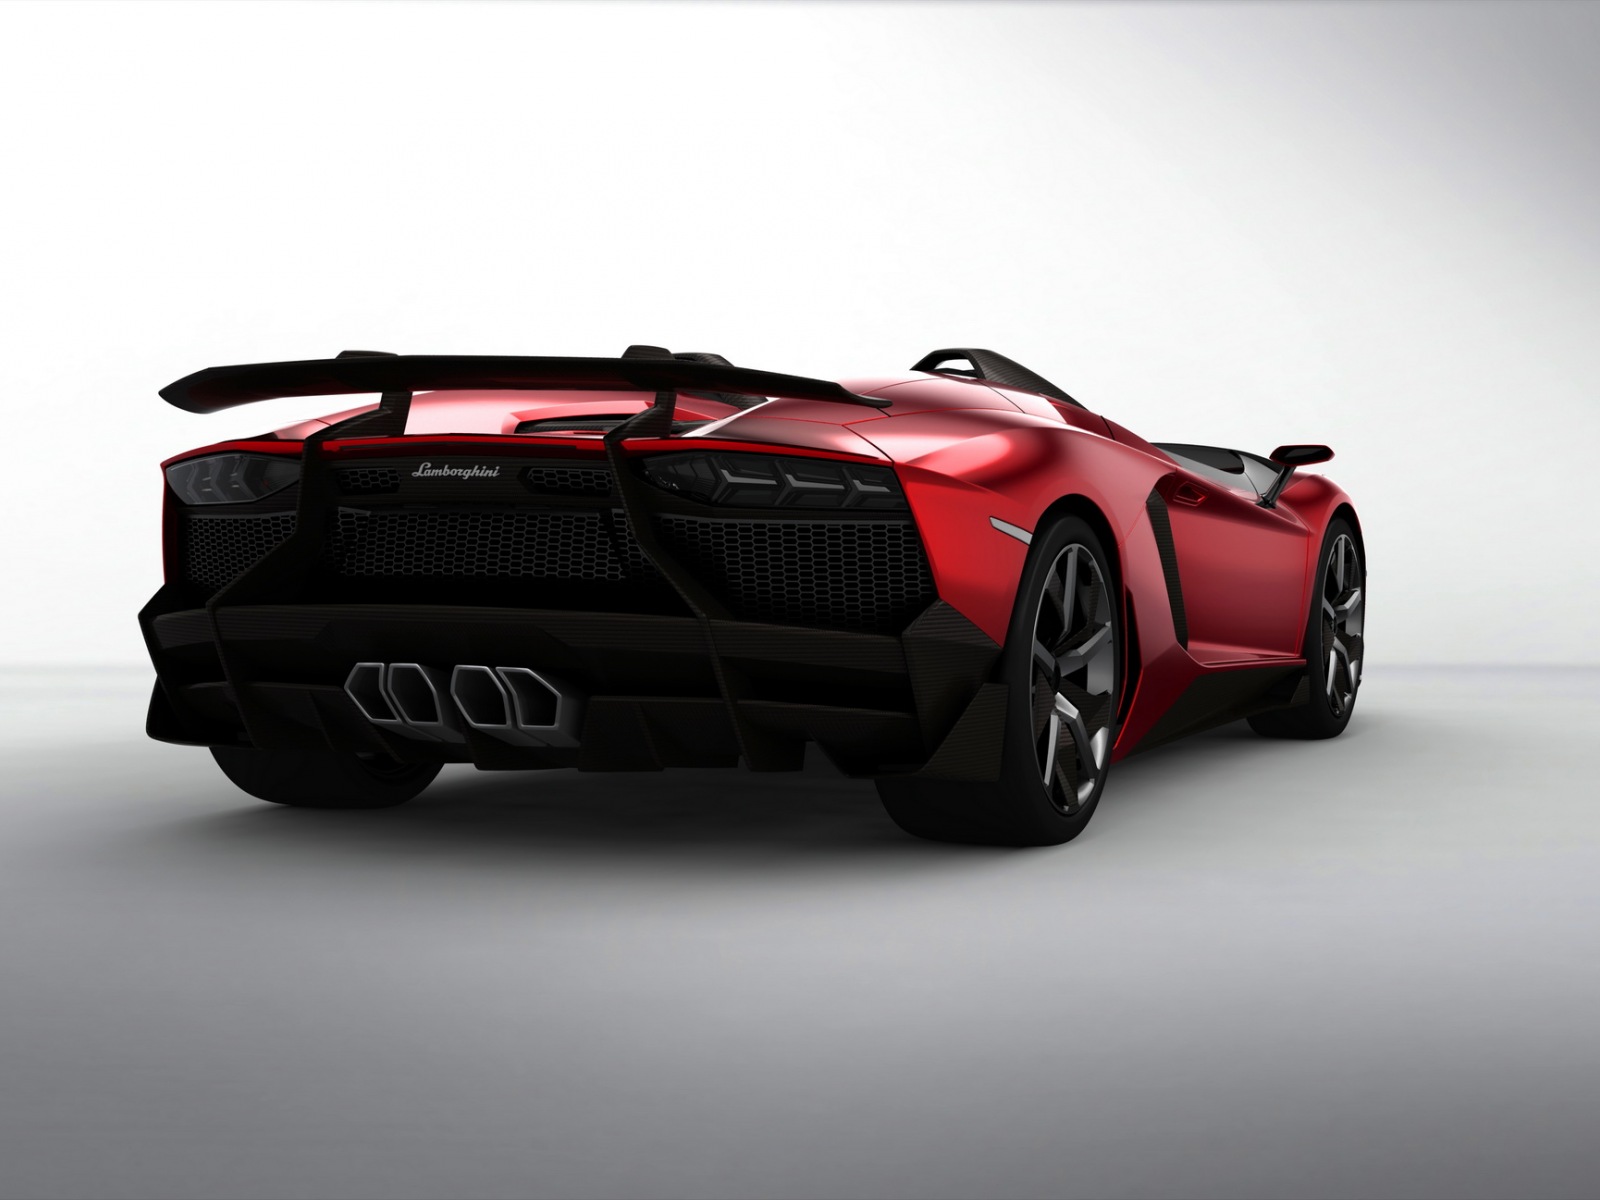 Lamborghini Aventador J photos and wallpapers   tuningnewsnet